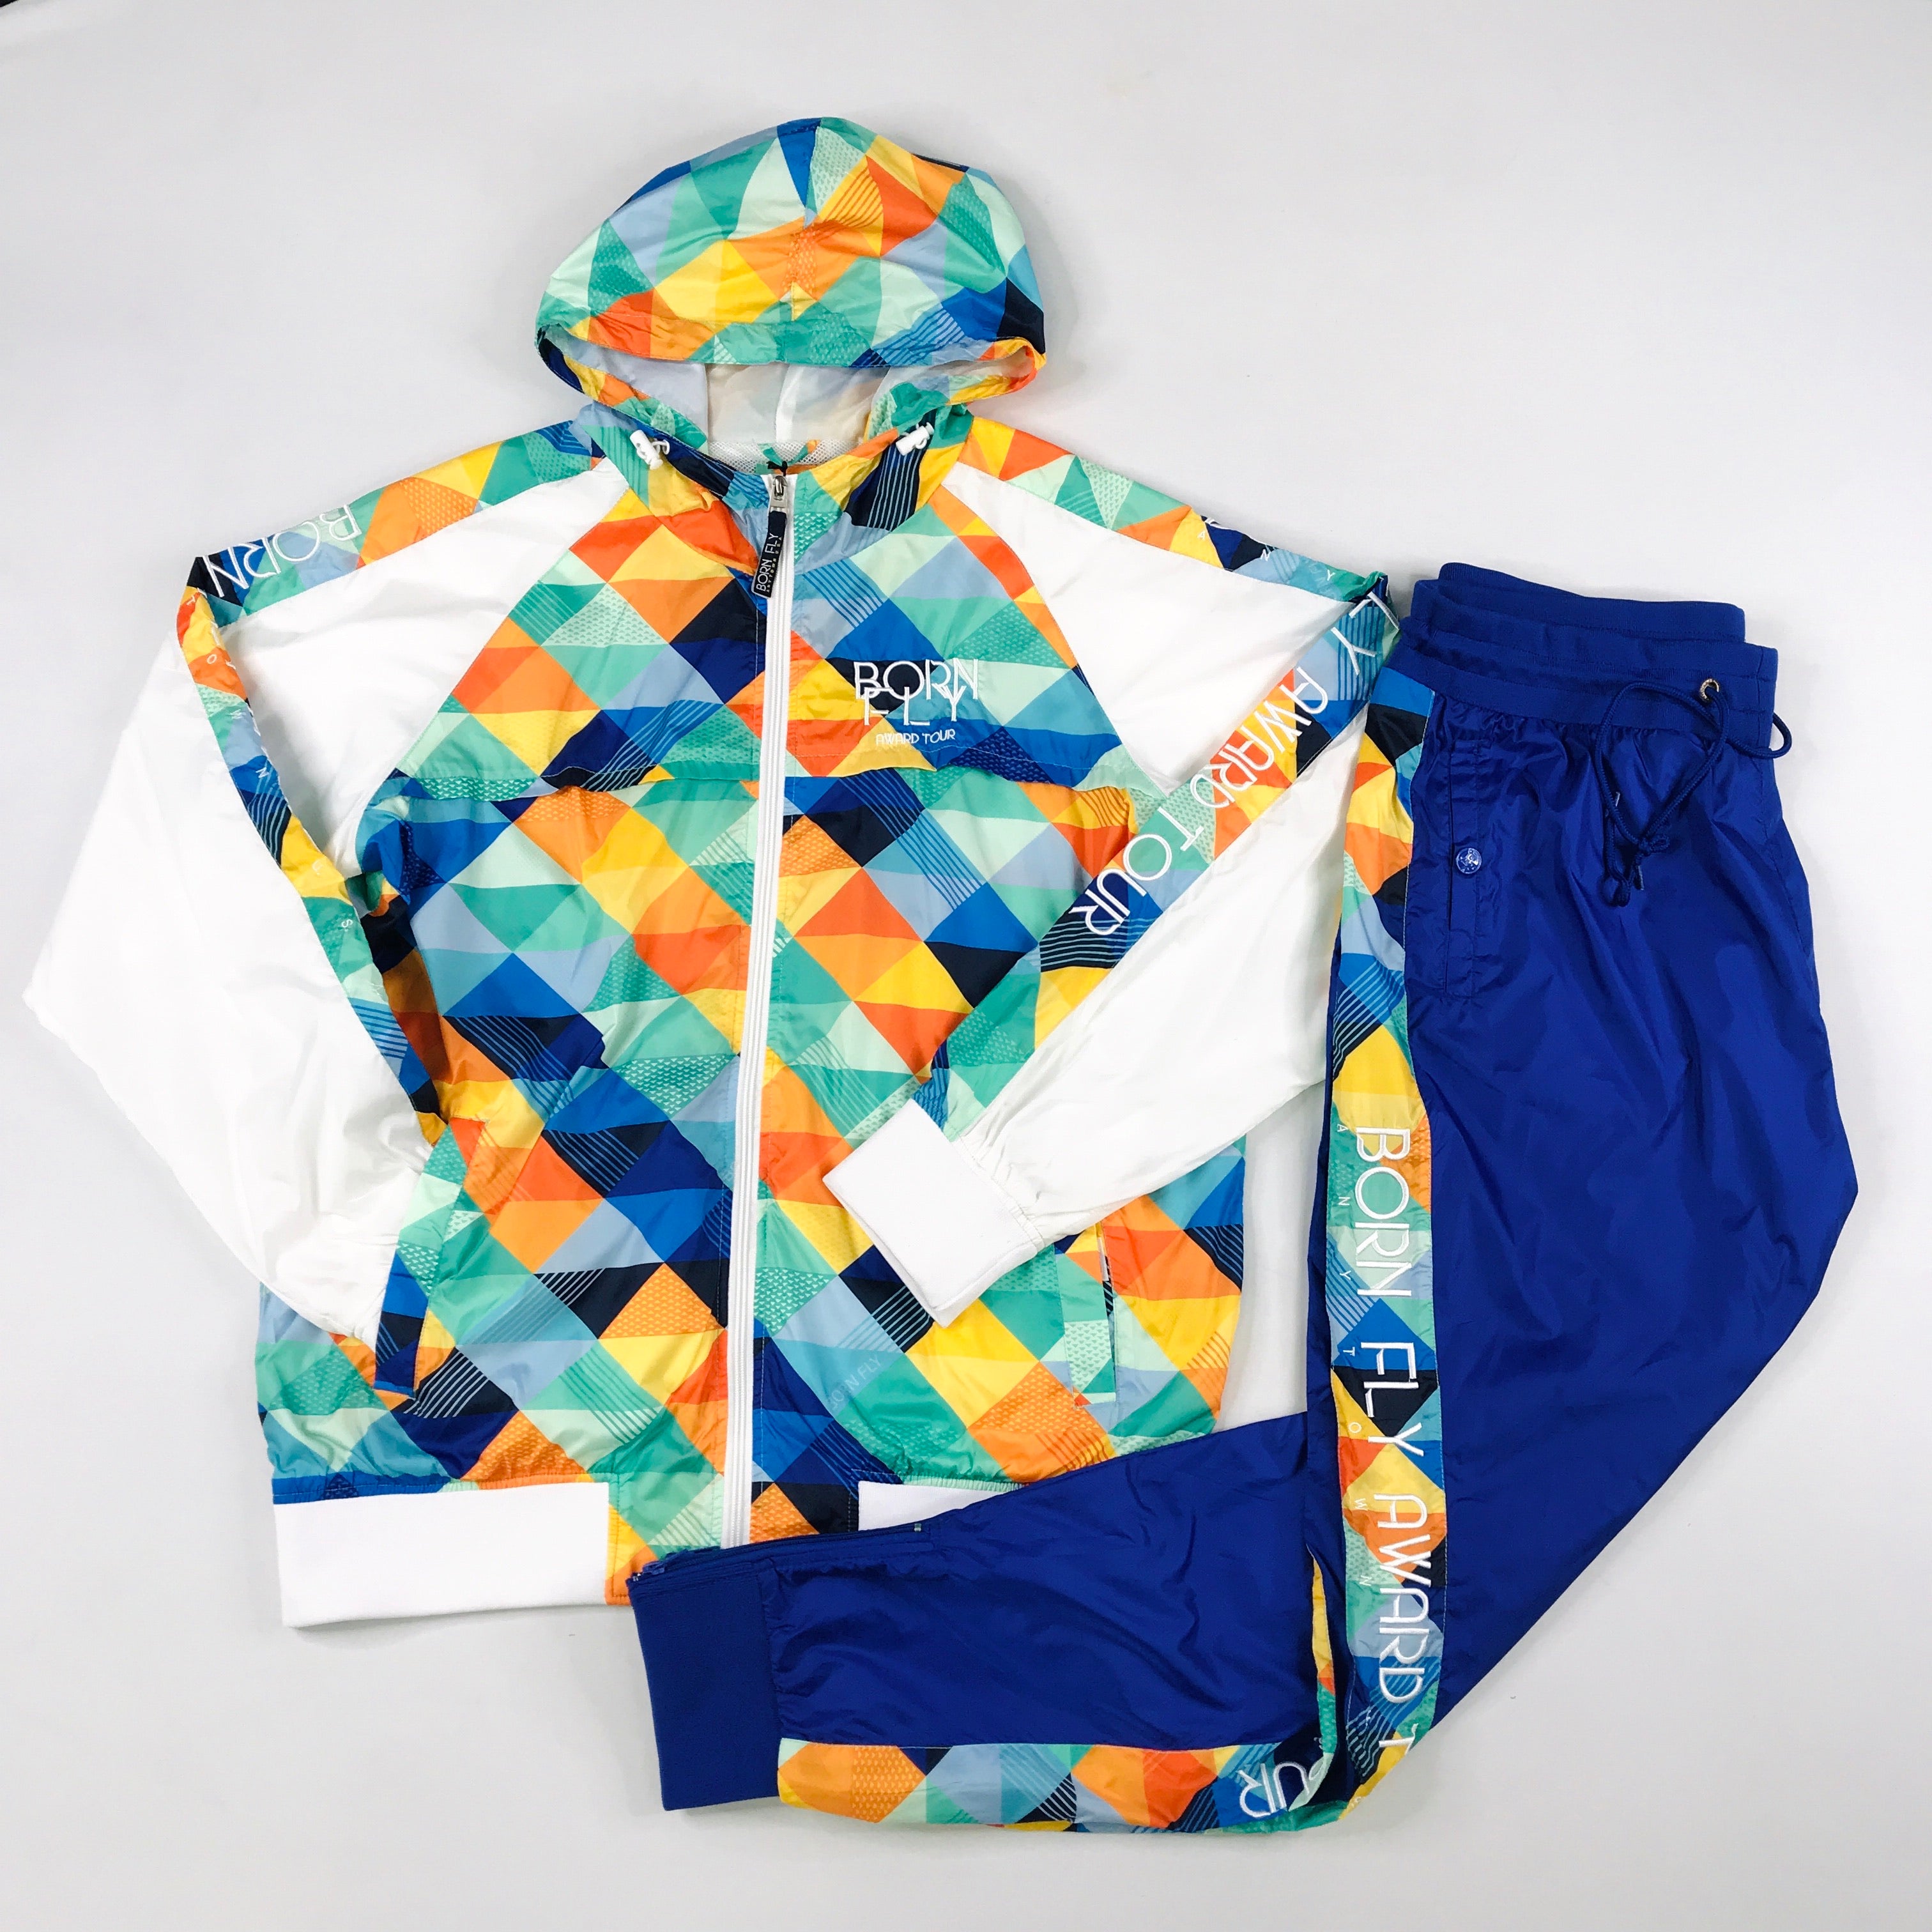 Born Fly multi-color windbreaker hoodie set in blue